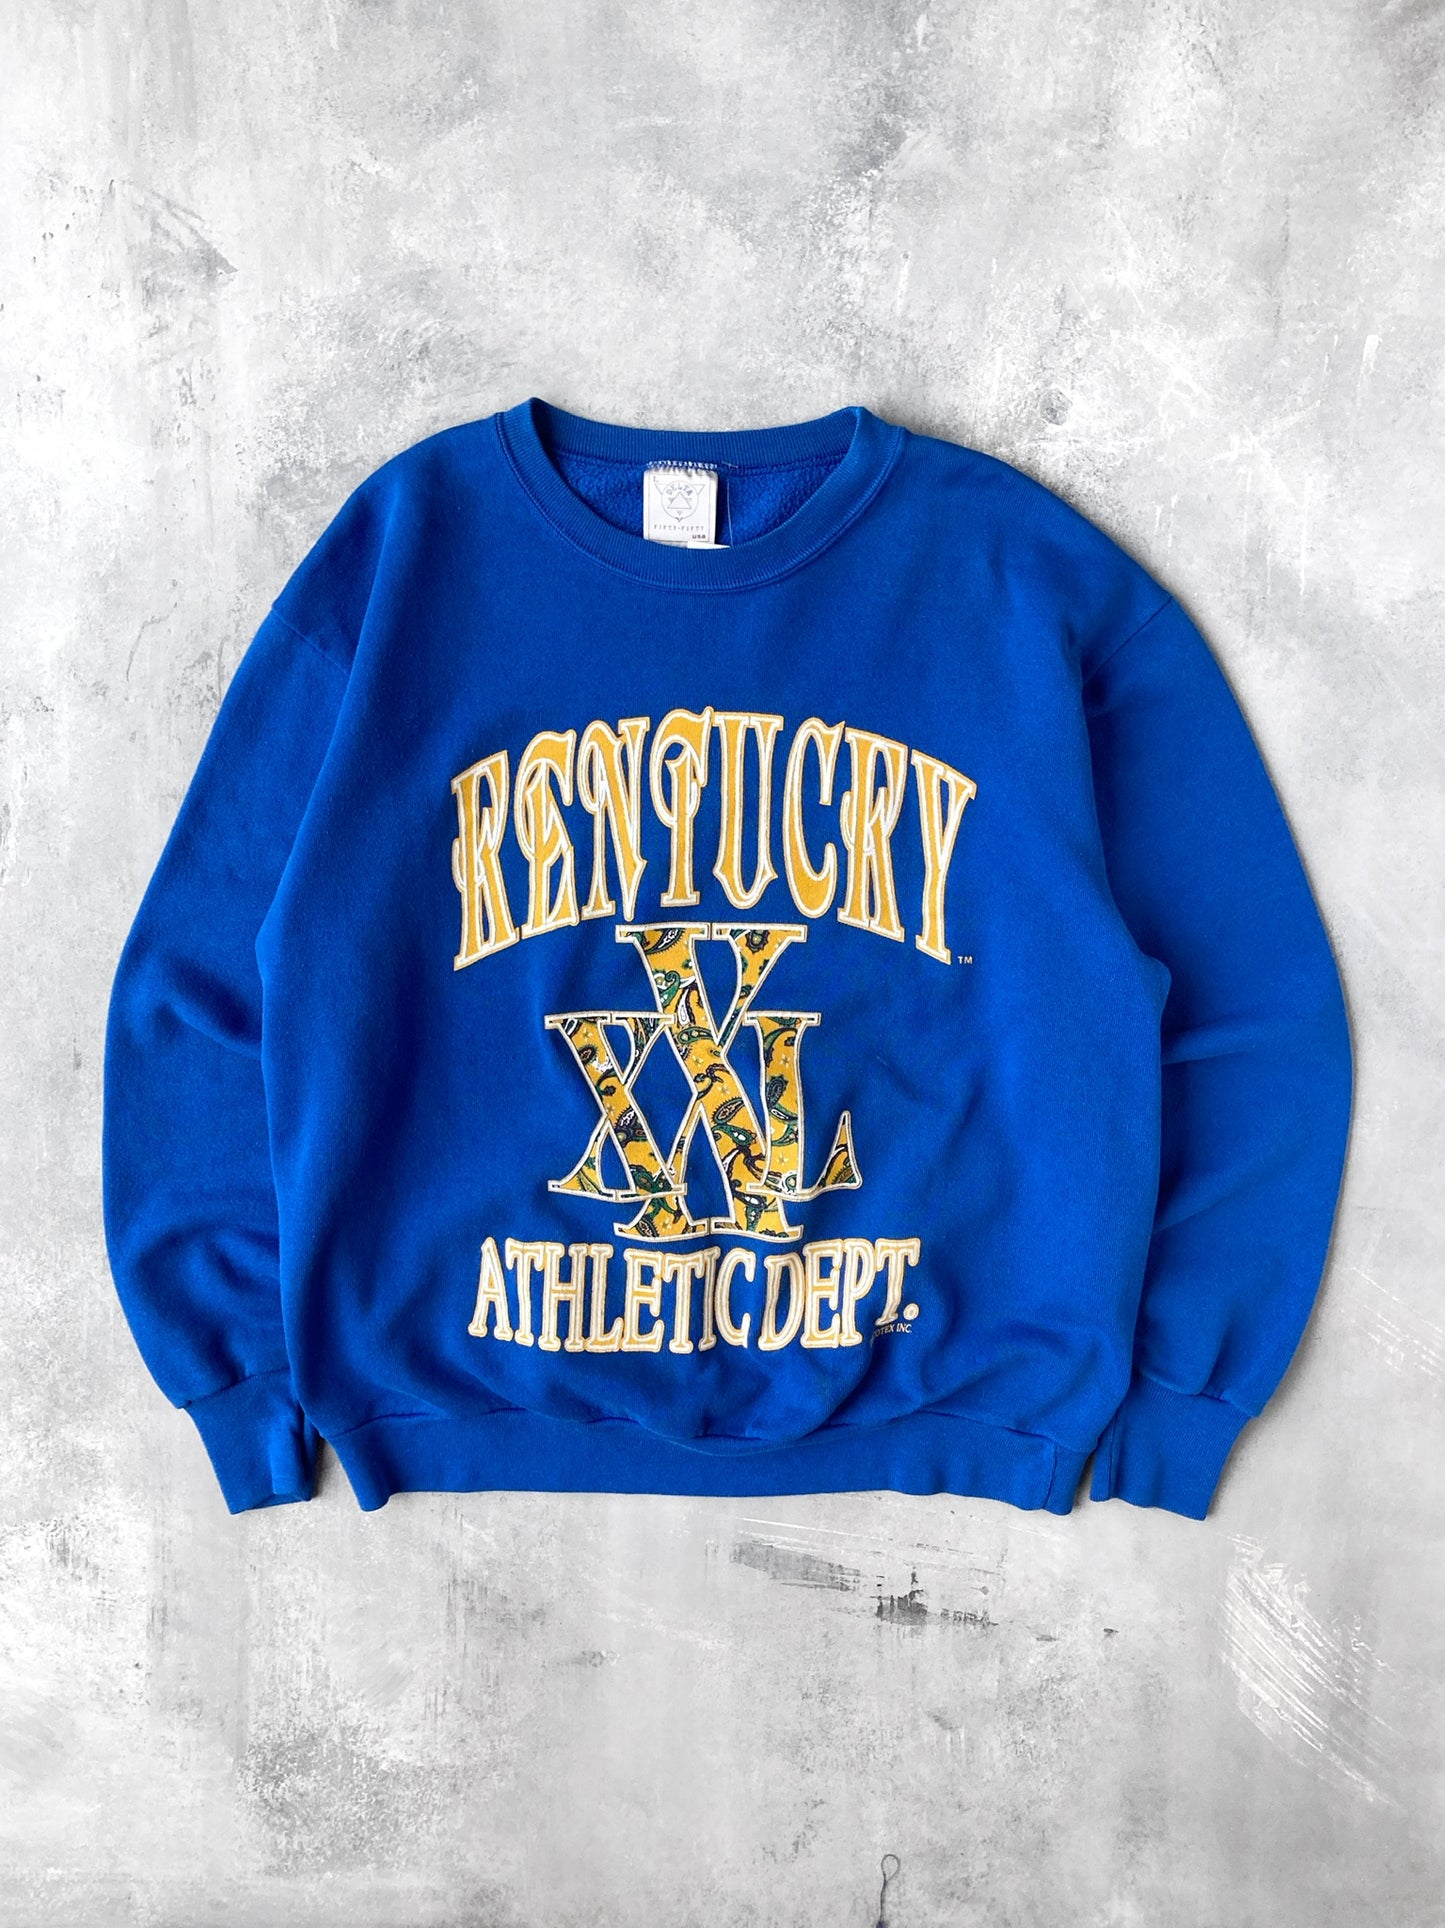 Kentucky Athletic Dept. Sweatshirt 90's - Medium